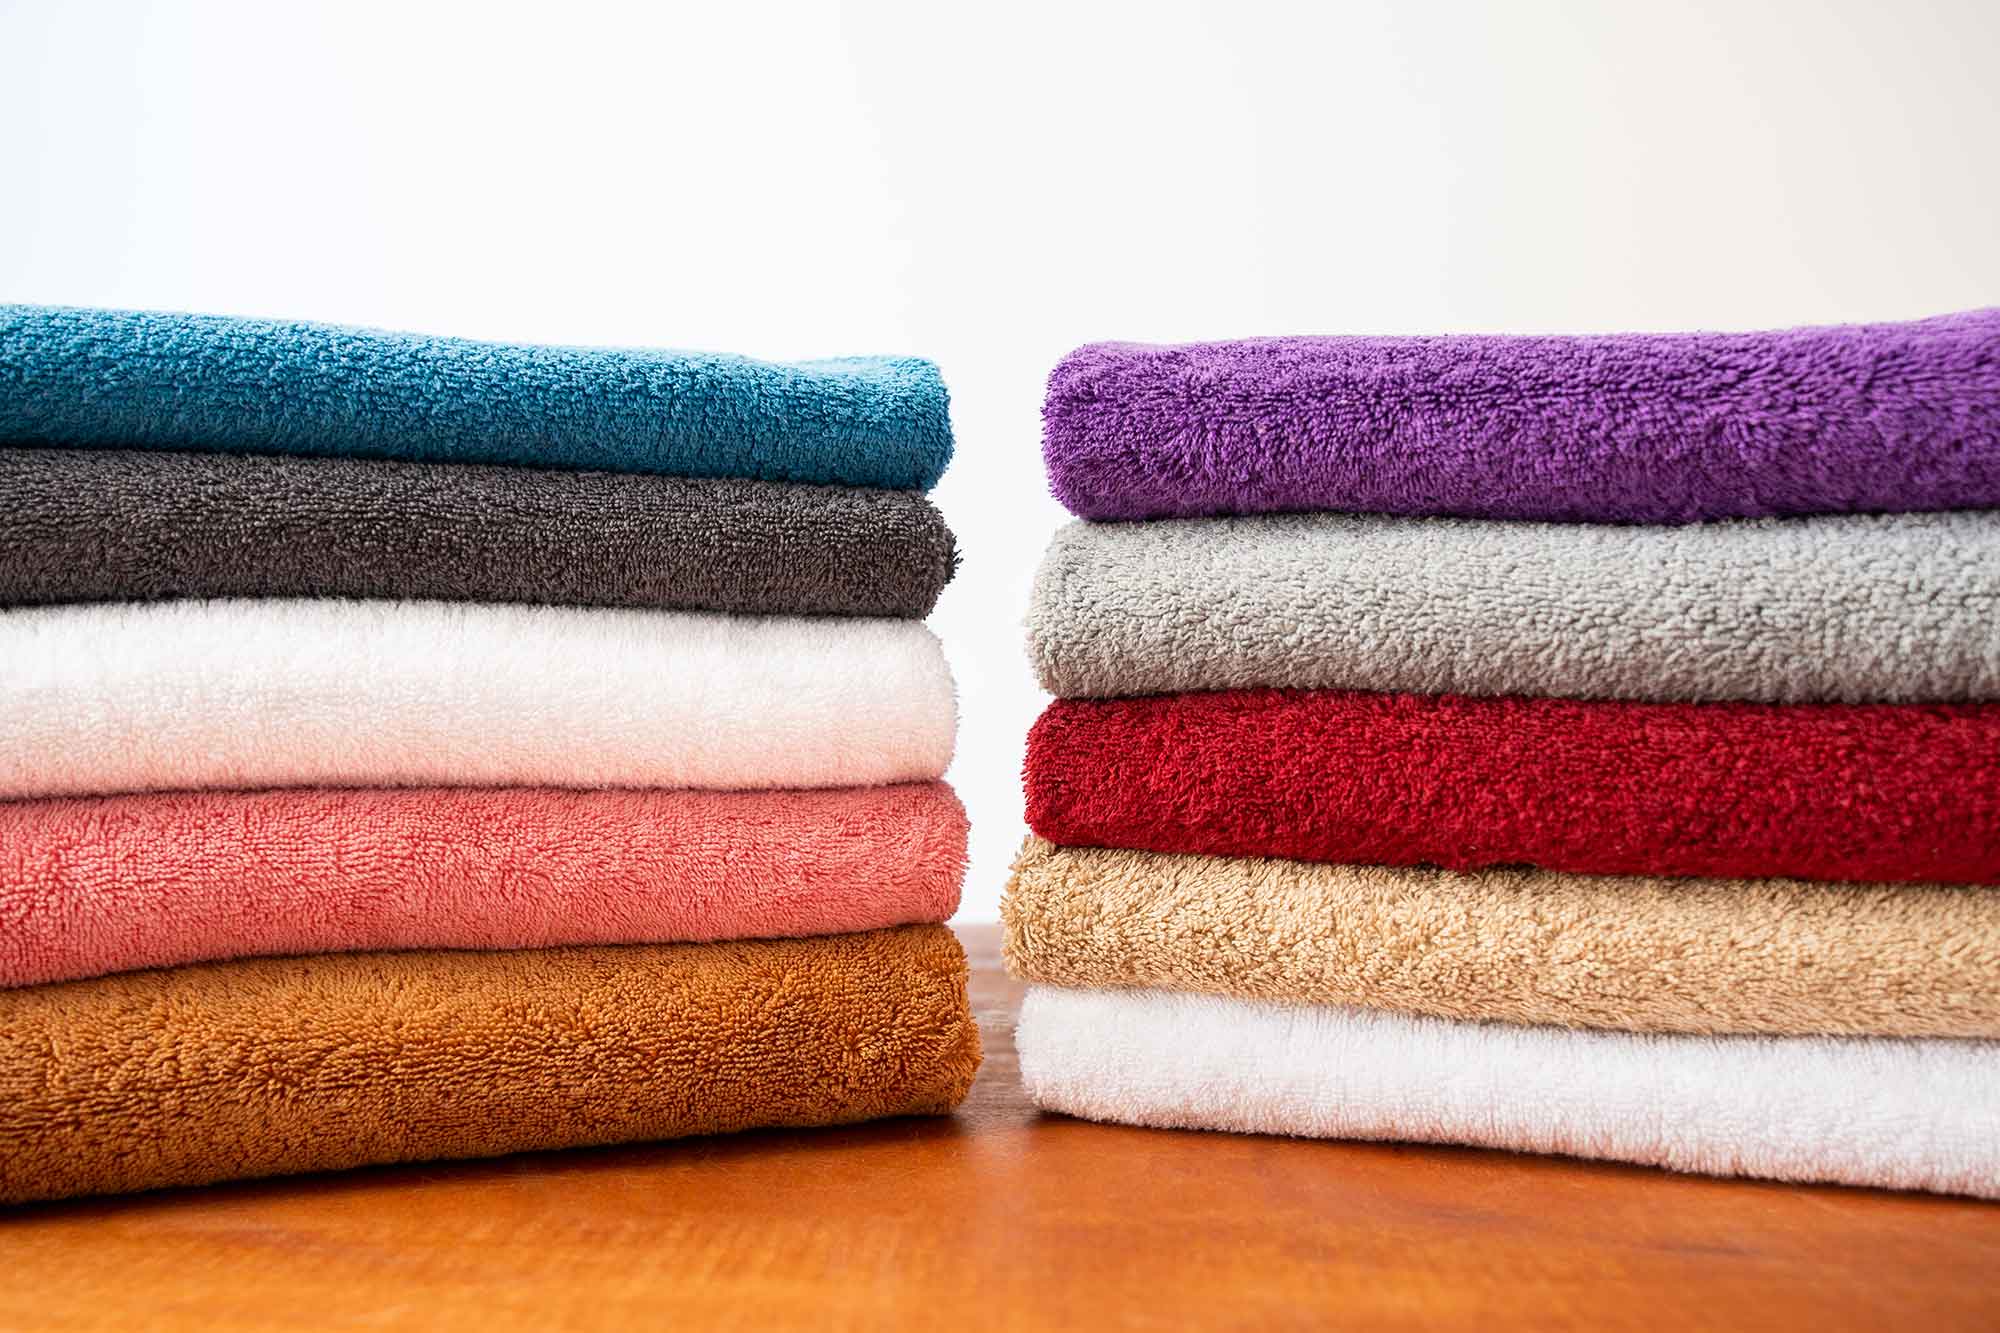 Royal Ascot 100% Zero Twist Cotton Towel Set 2 pc Set- 2 Large Bath Sheets Machine Washable 550 GSM Softer Than a Cloud SPA Towels Plush Absorbent